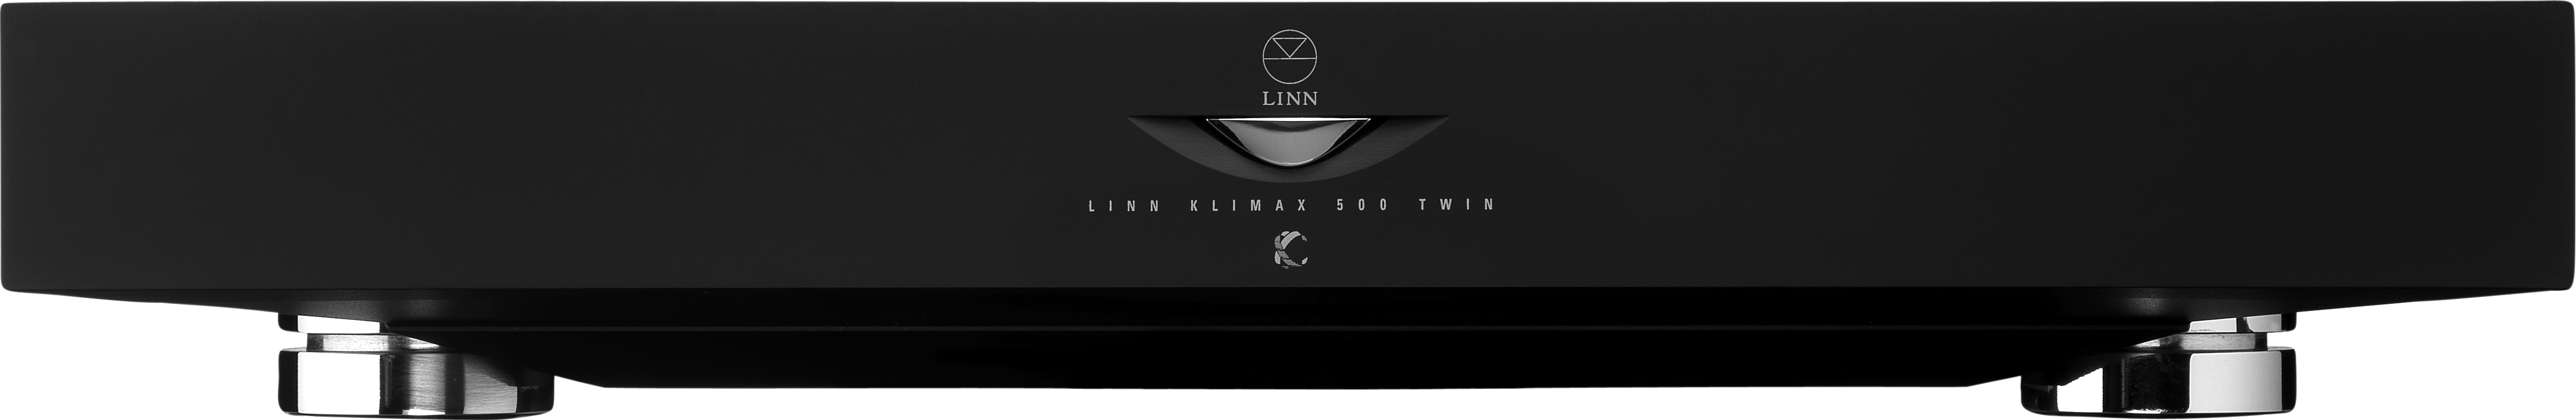 Klimax Twin Black Front transp